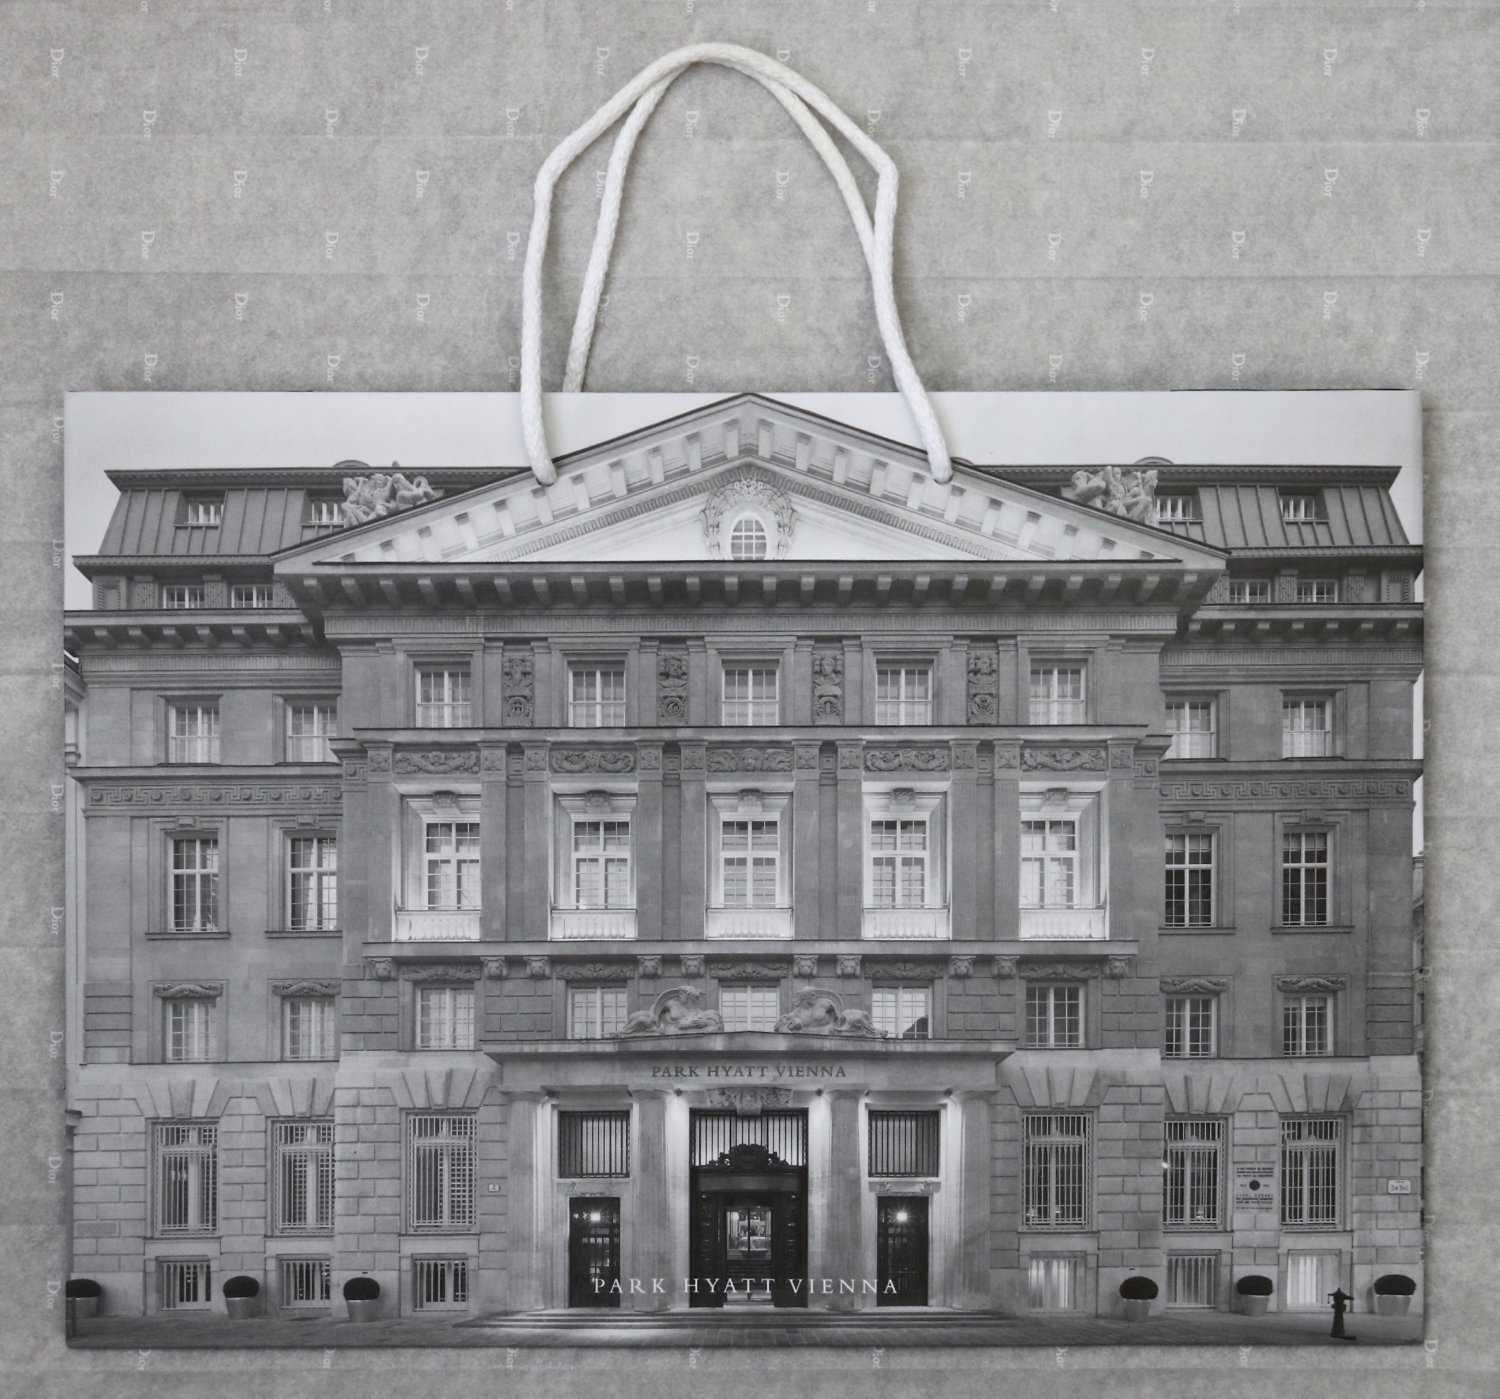 Park Hyatt Vienna Luxury Hotel Large Paper Gift Bag 16" x 11.5" Black & White